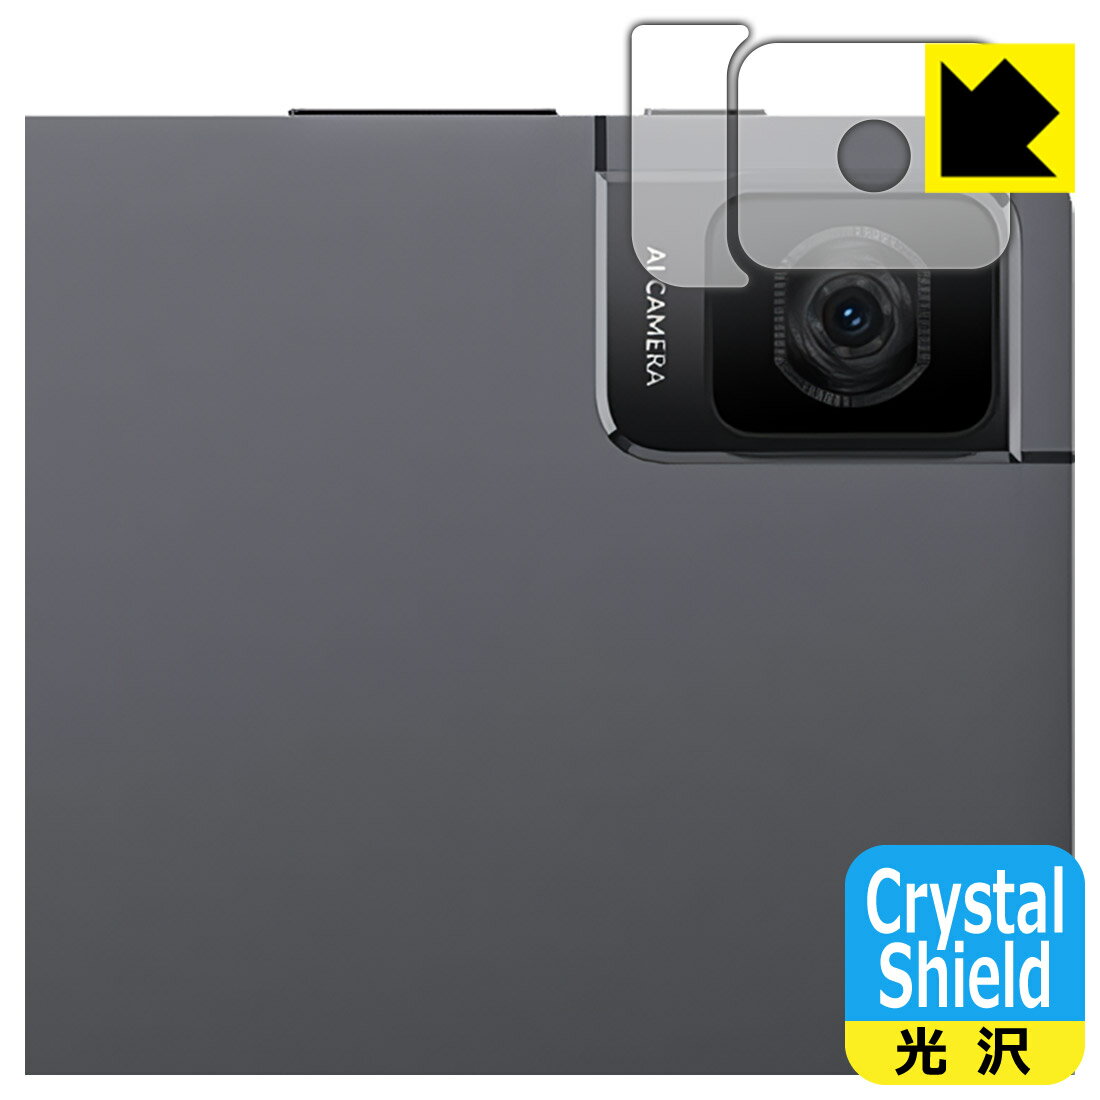 Crystal Shield【光沢】保護フィルム TCL TAB 10 Gen 2 (8496G1) レンズ周辺部用 日本製 自社製造直販